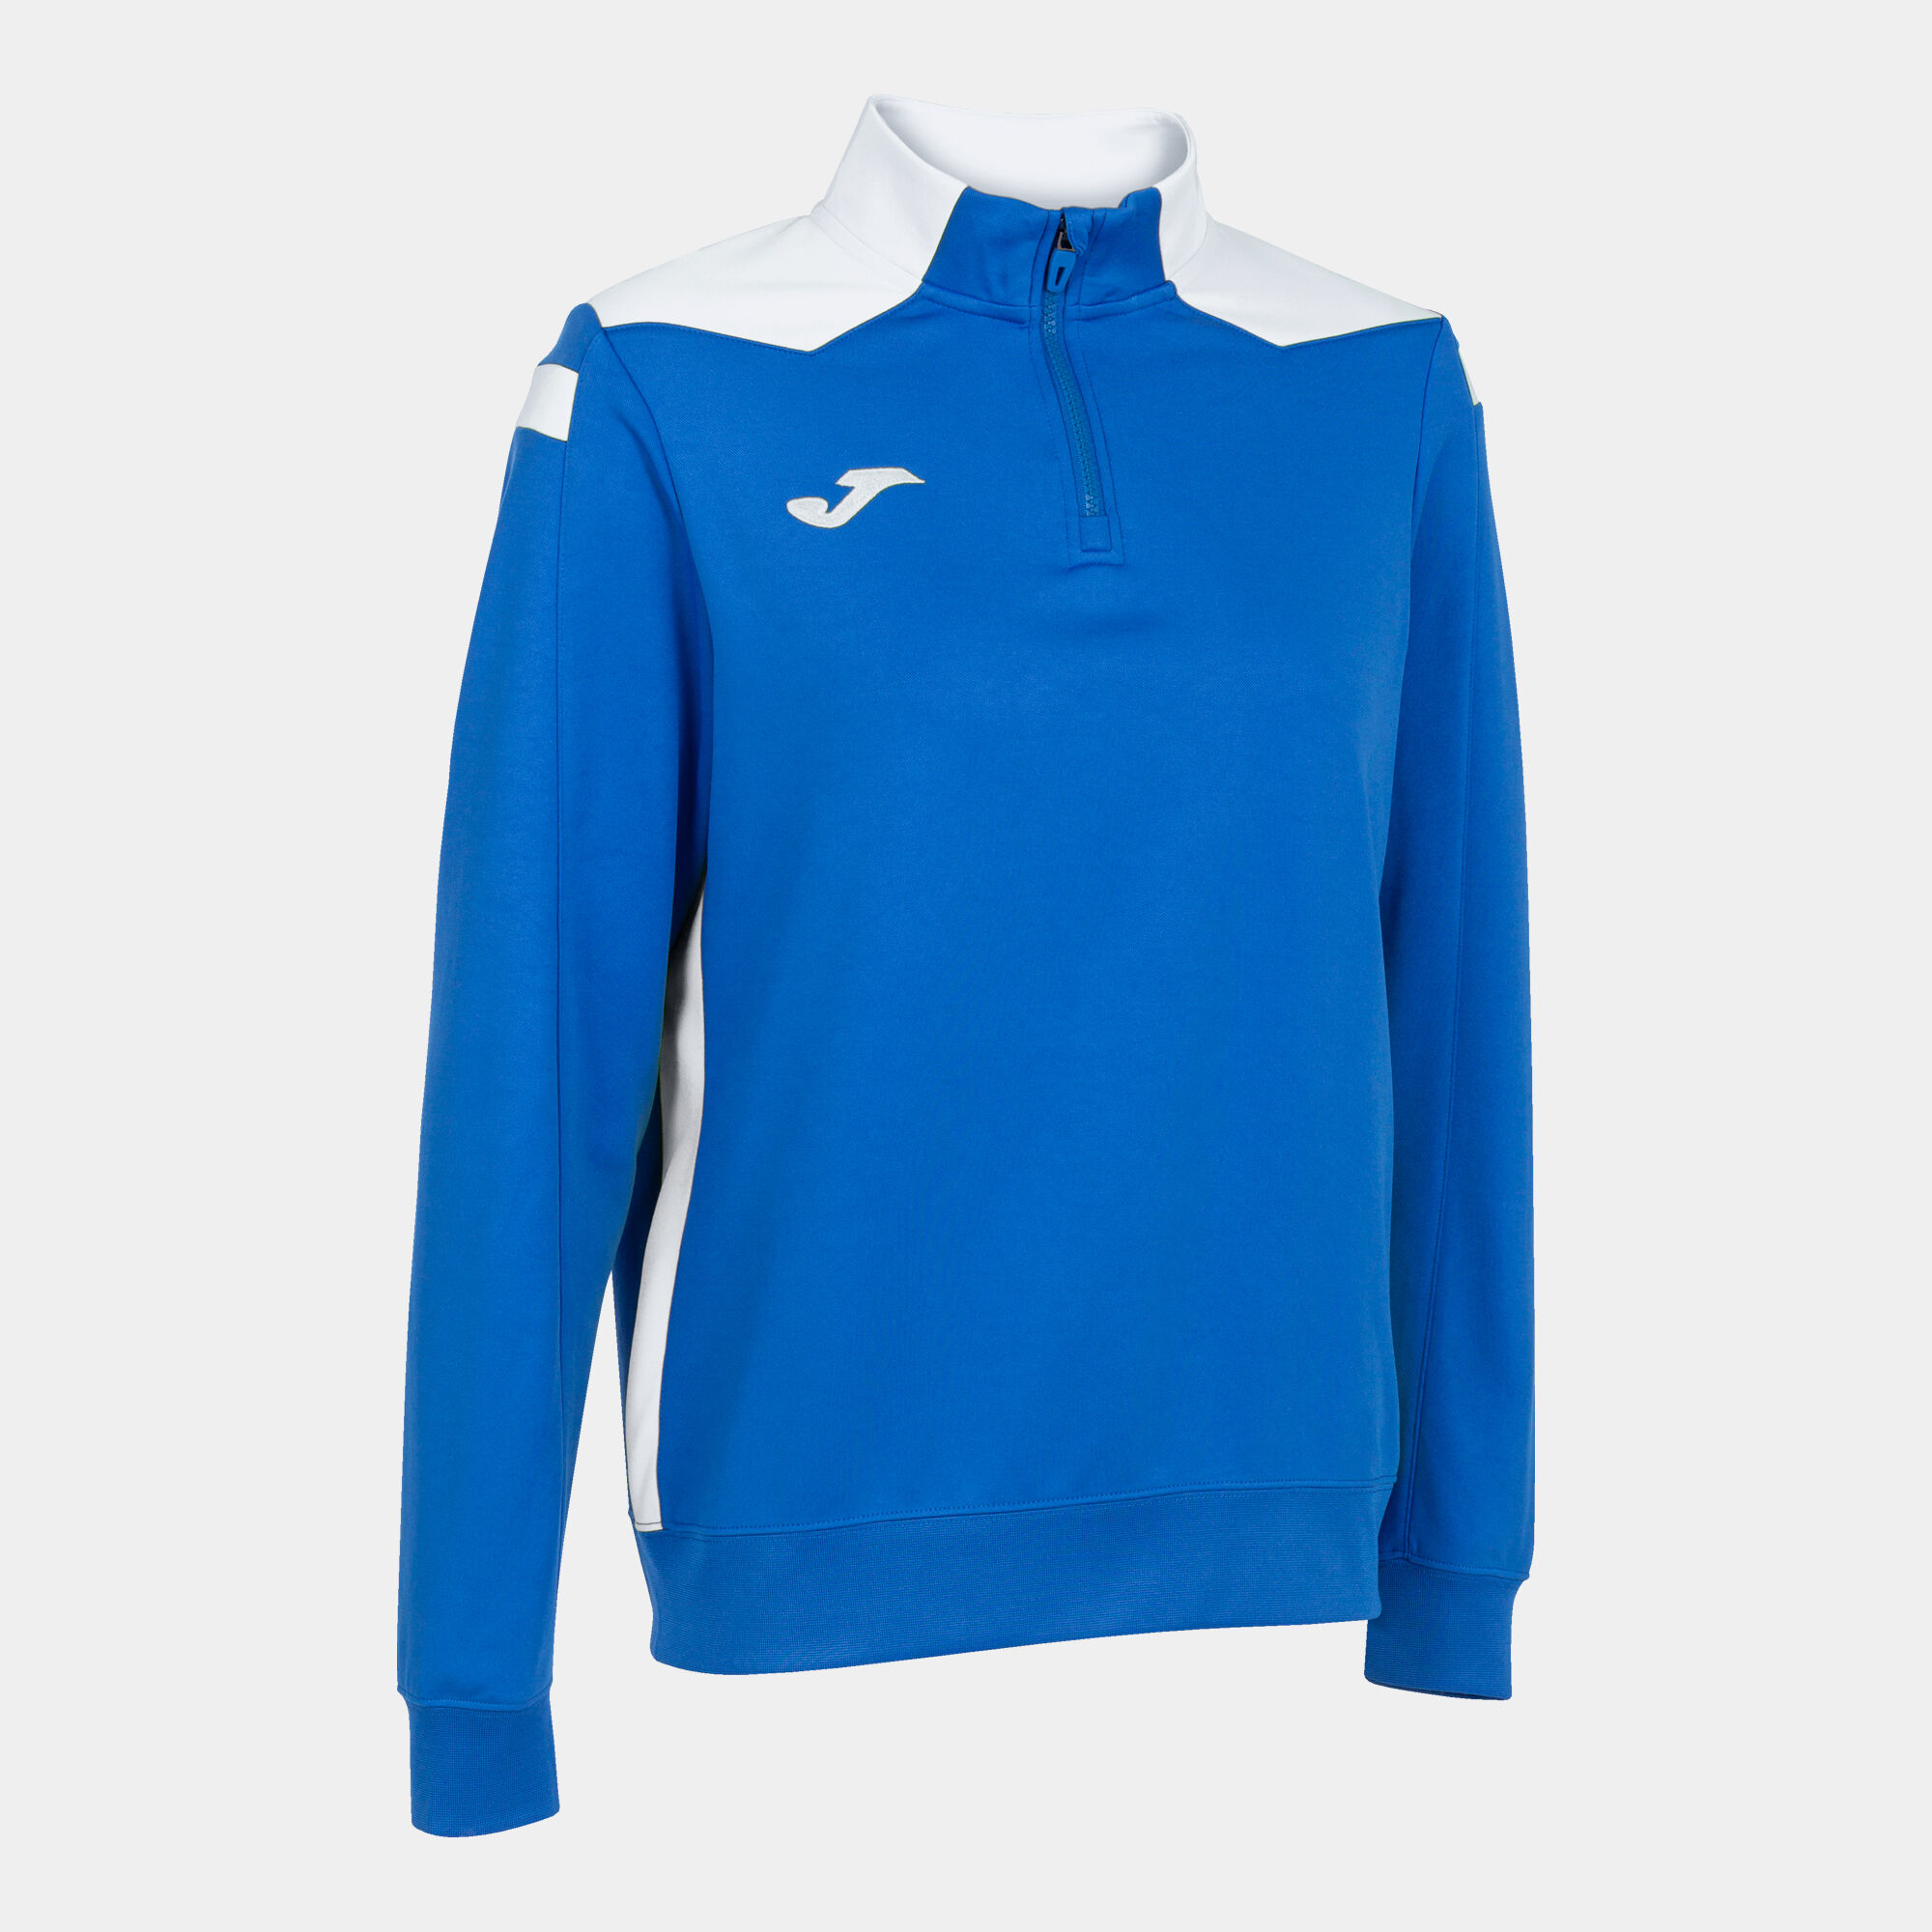 Sweatshirt frau Championship VI königsblau weiß